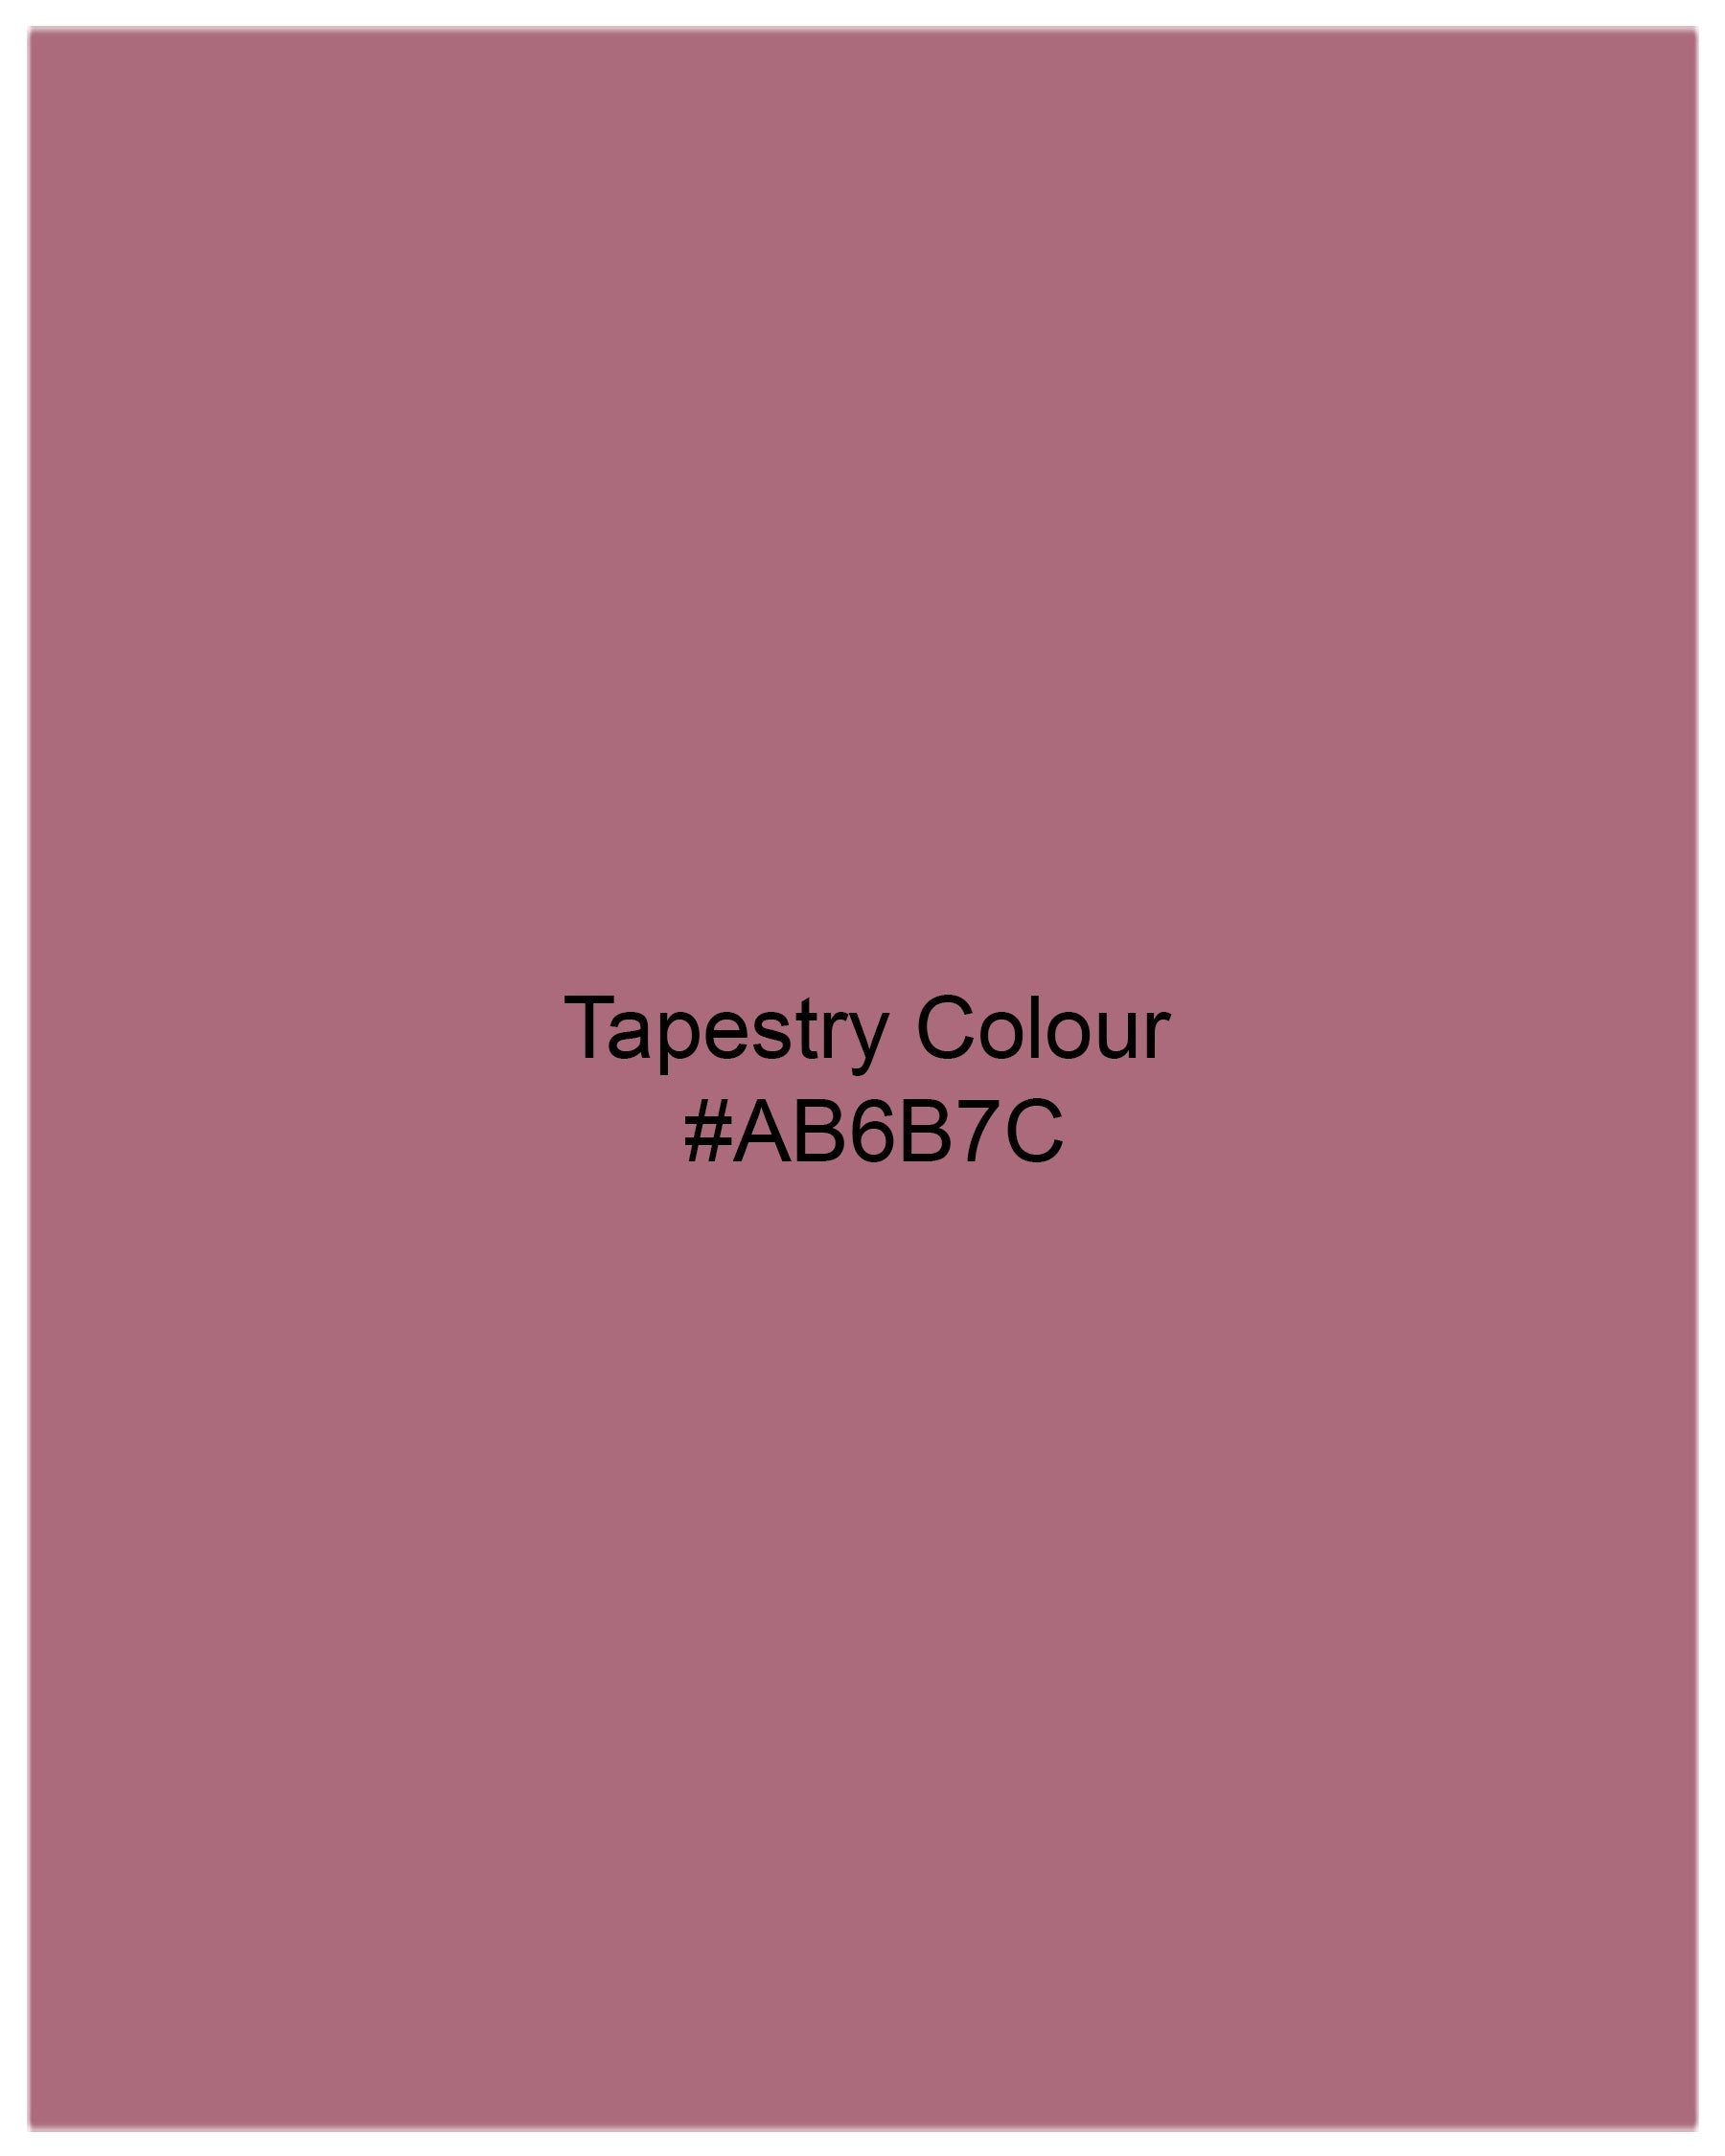 Tapestry Pink Subtle Striped Dobby Textured Premium Giza Cotton Shirt 7937-BLE-38,7937-BLE-H-38,7937-BLE-39,7937-BLE-H-39,7937-BLE-40,7937-BLE-H-40,7937-BLE-42,7937-BLE-H-42,7937-BLE-44,7937-BLE-H-44,7937-BLE-46,7937-BLE-H-46,7937-BLE-48,7937-BLE-H-48,7937-BLE-50,7937-BLE-H-50,7937-BLE-52,7937-BLE-H-52